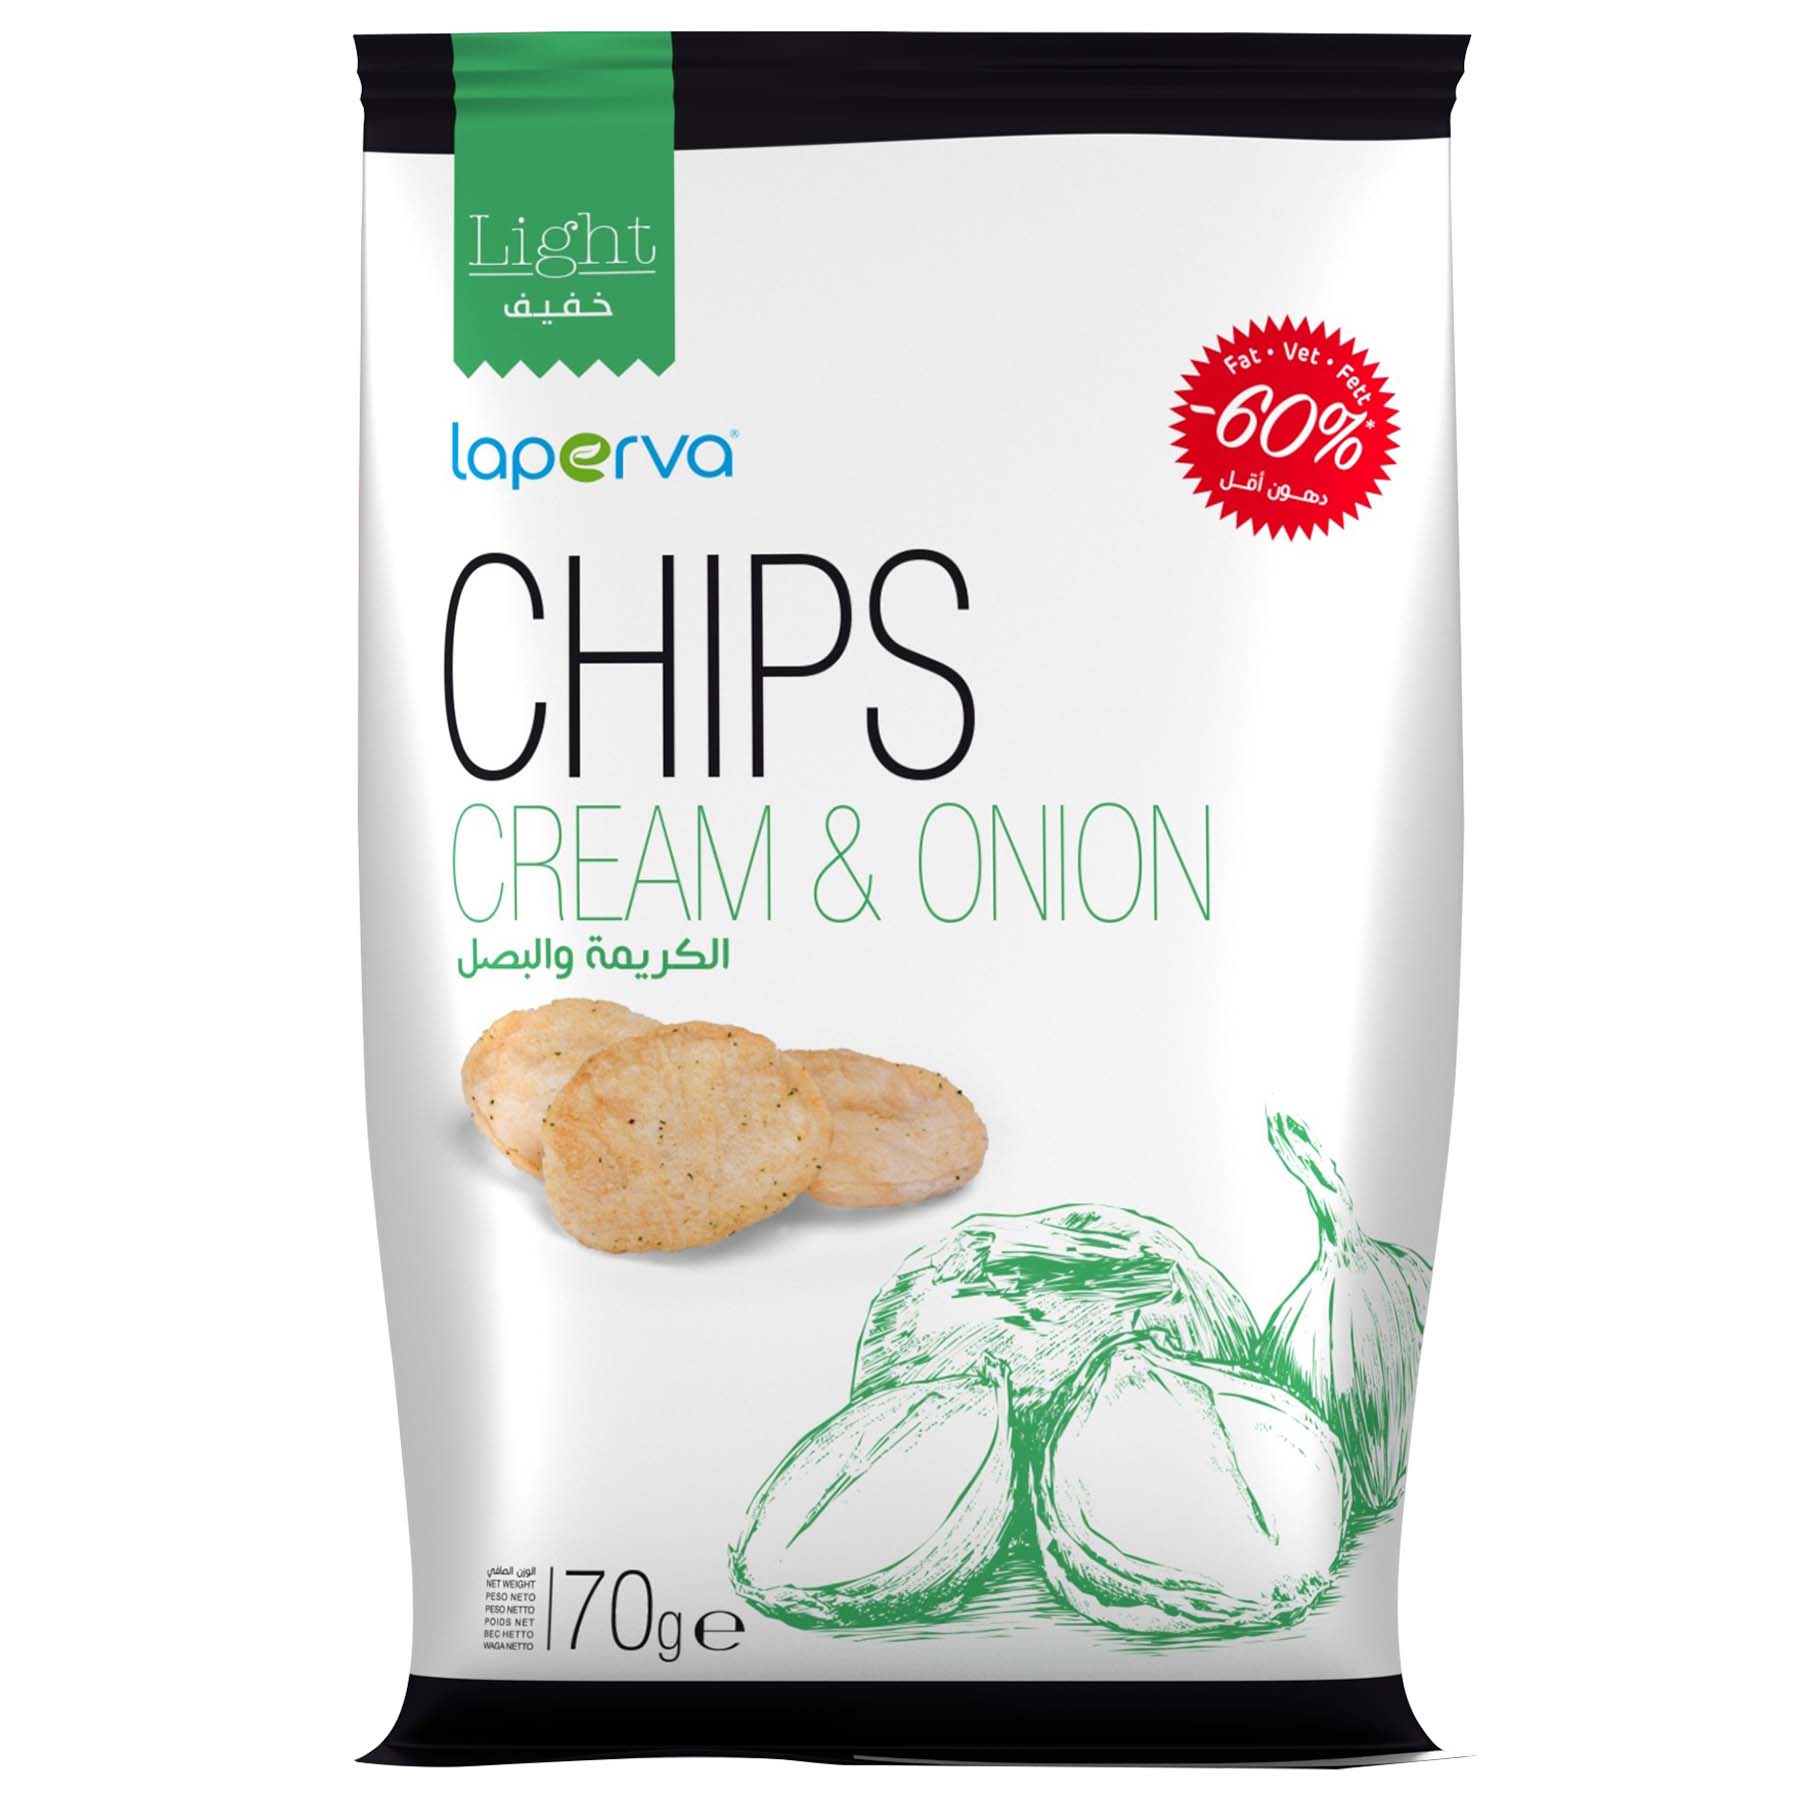 Laperva Light Chips, Cream & Onion, 70 Gm